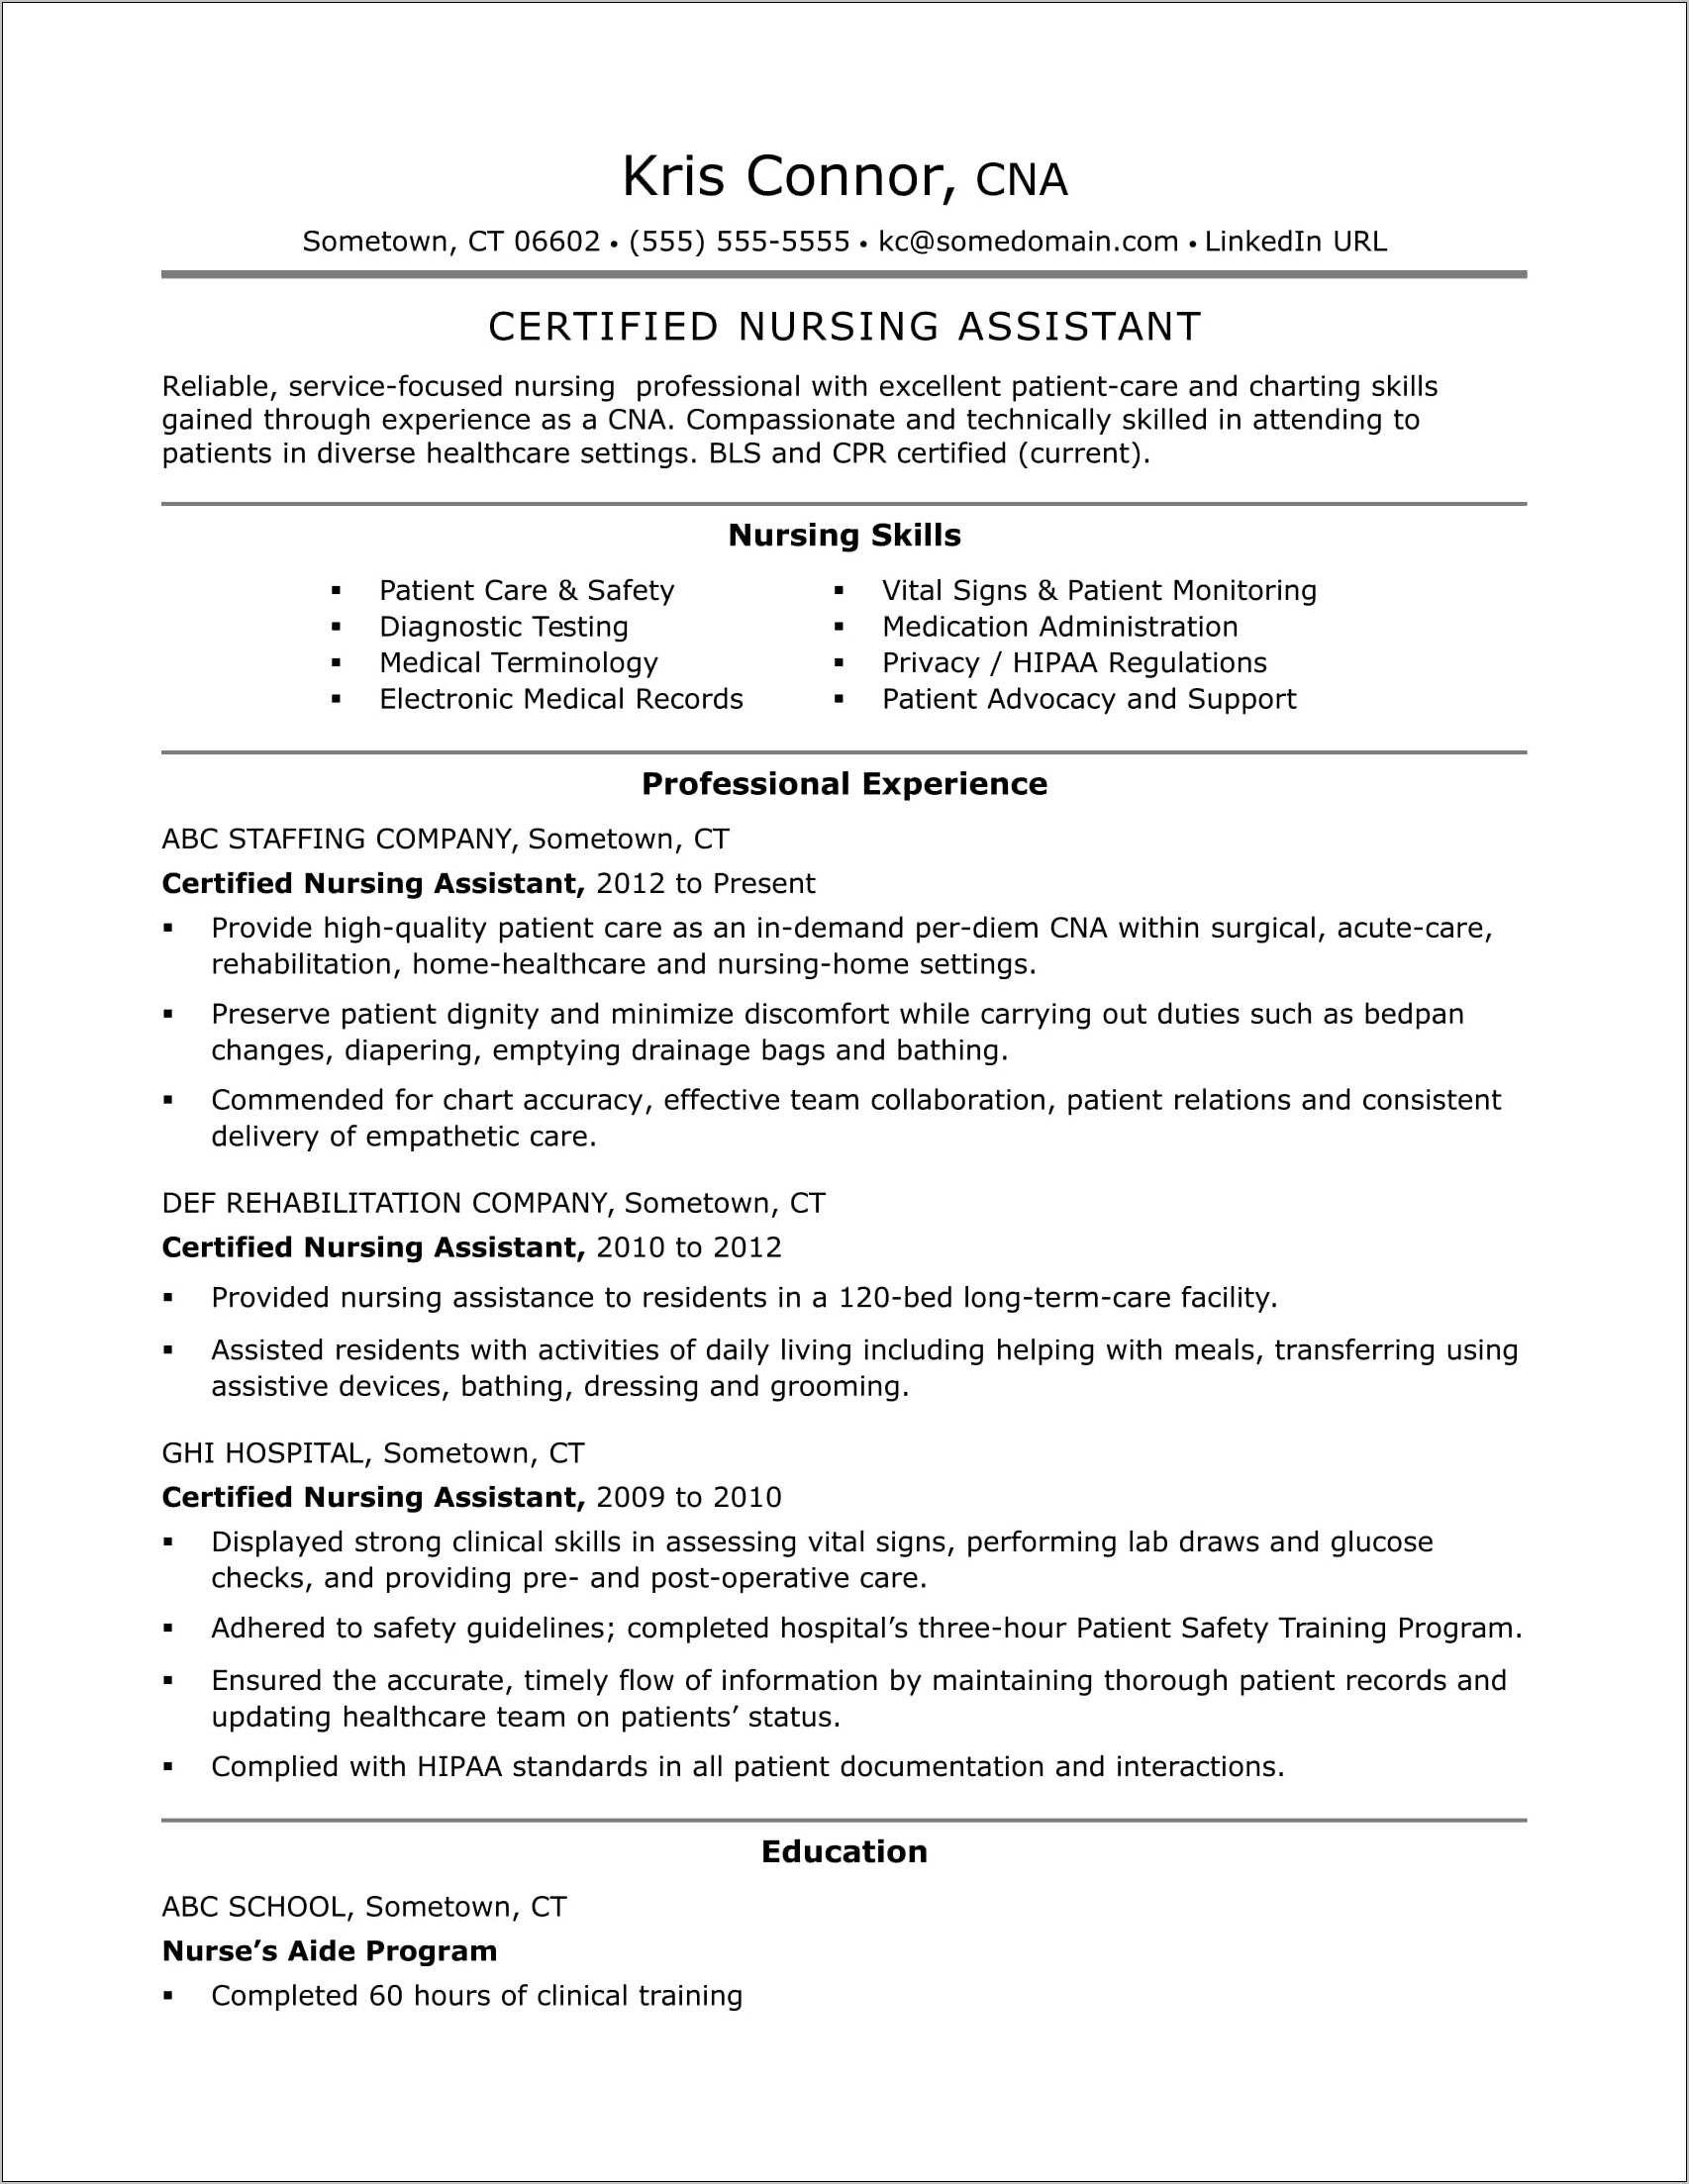 Detailed Resume Sample With Job Description For Nurses